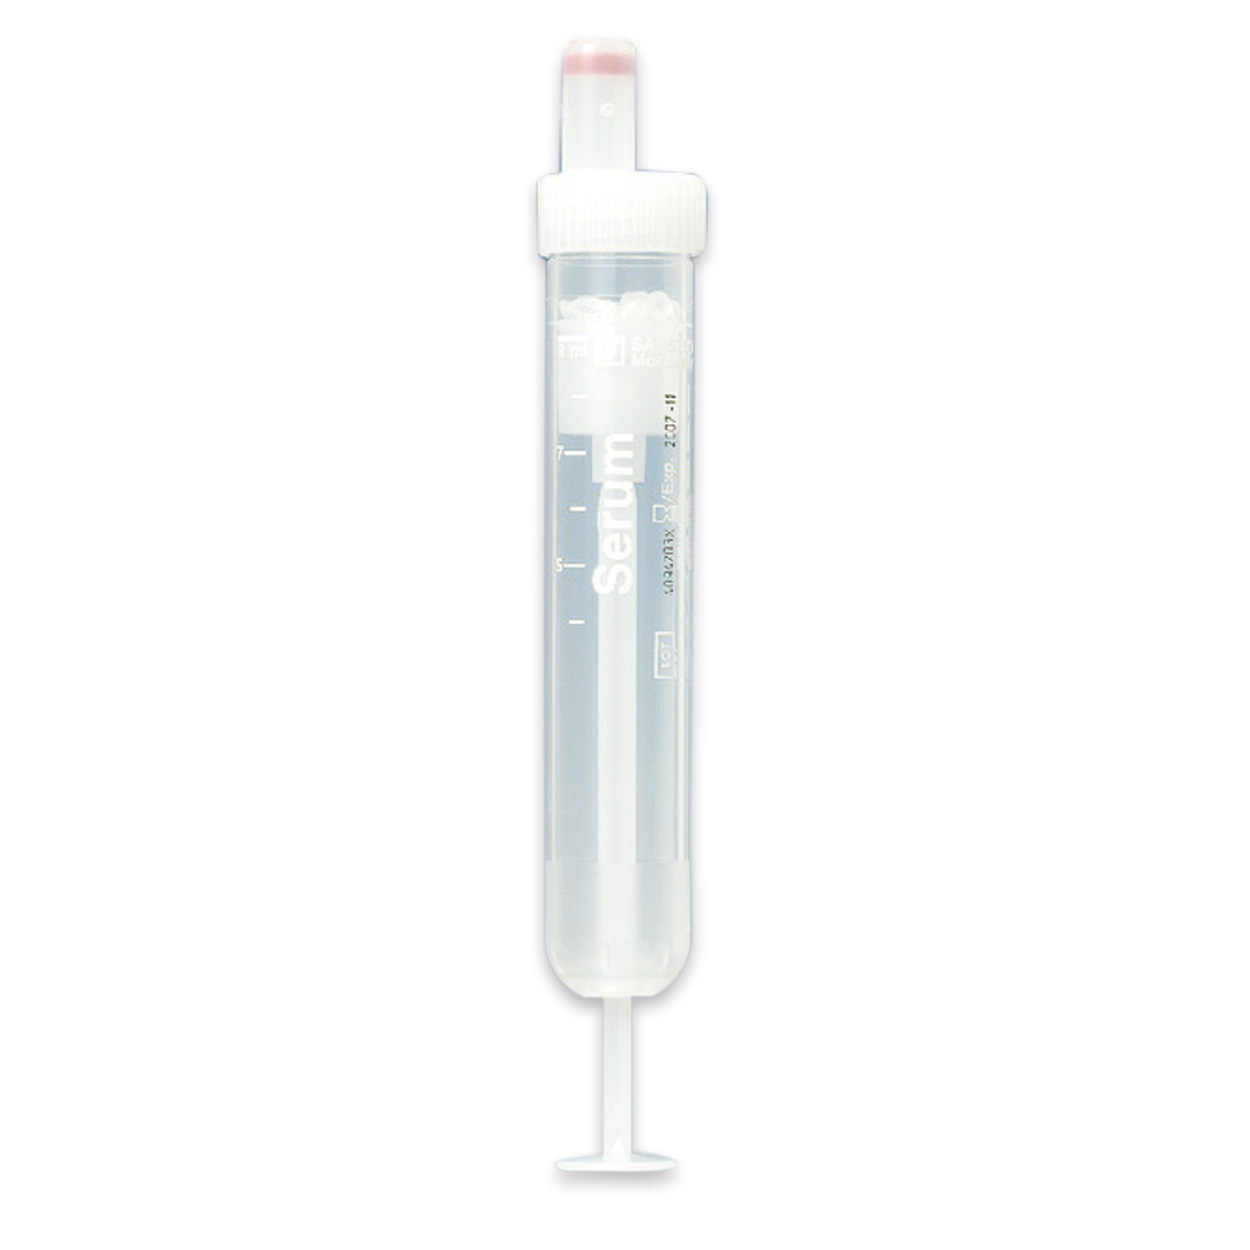 S-MONOVETTEN® Serum 9,0 ml, 92 x 16 mm - Packung à 50 Stück